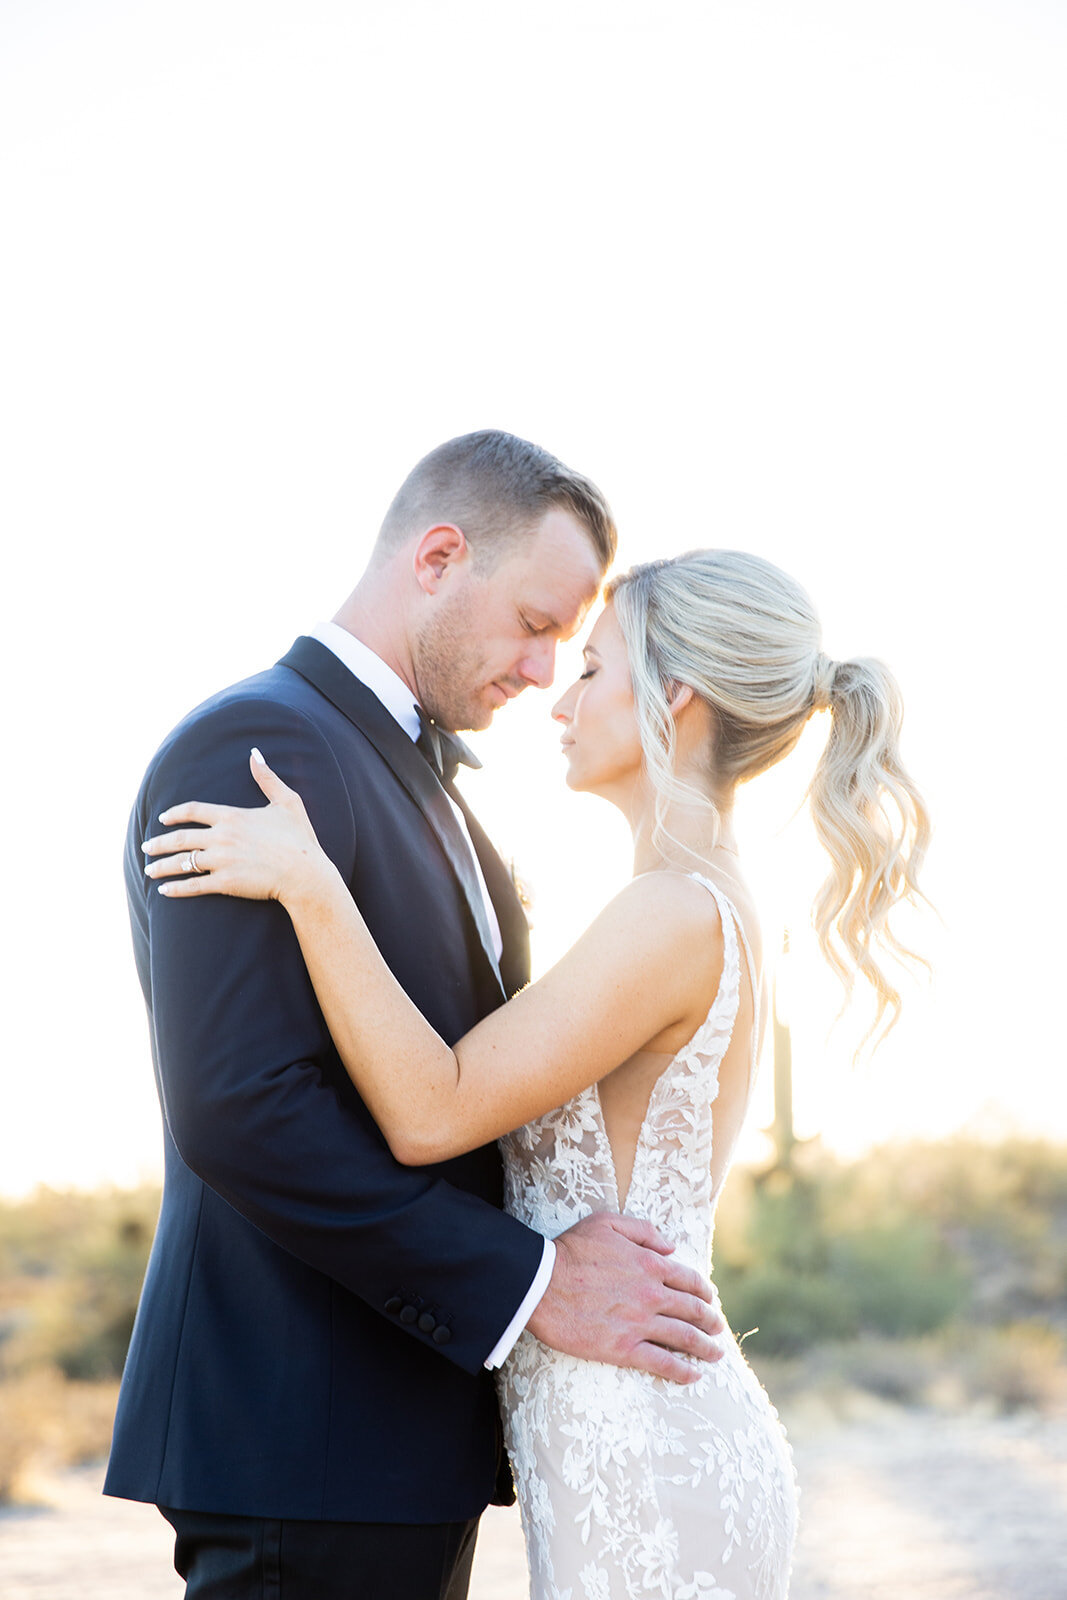 Karlie Colleen Photography - Ashley & Grant Wedding - The Paseo - Phoenix Arizona-804